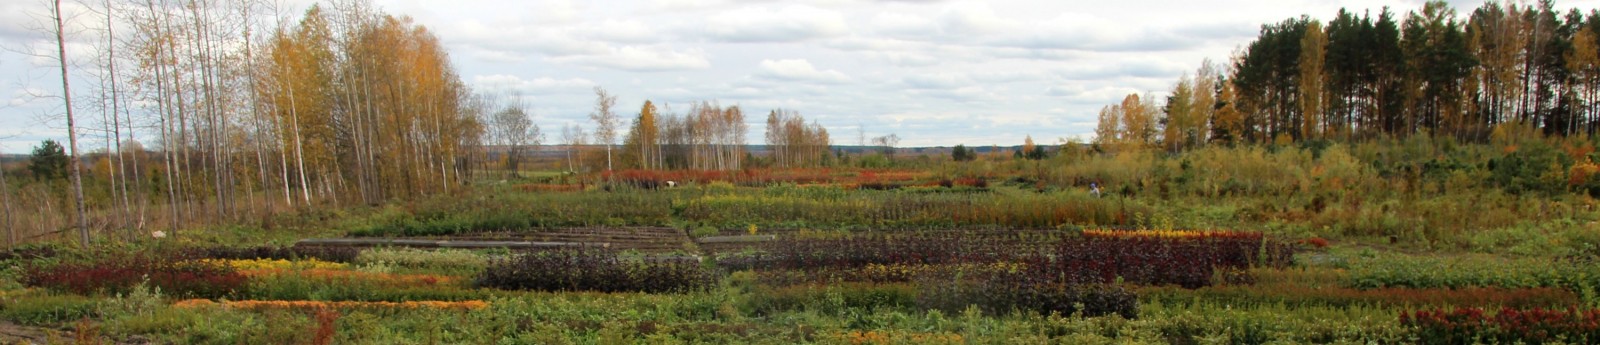 30 сентября. Осенняя панорама питомника: буйство красок.